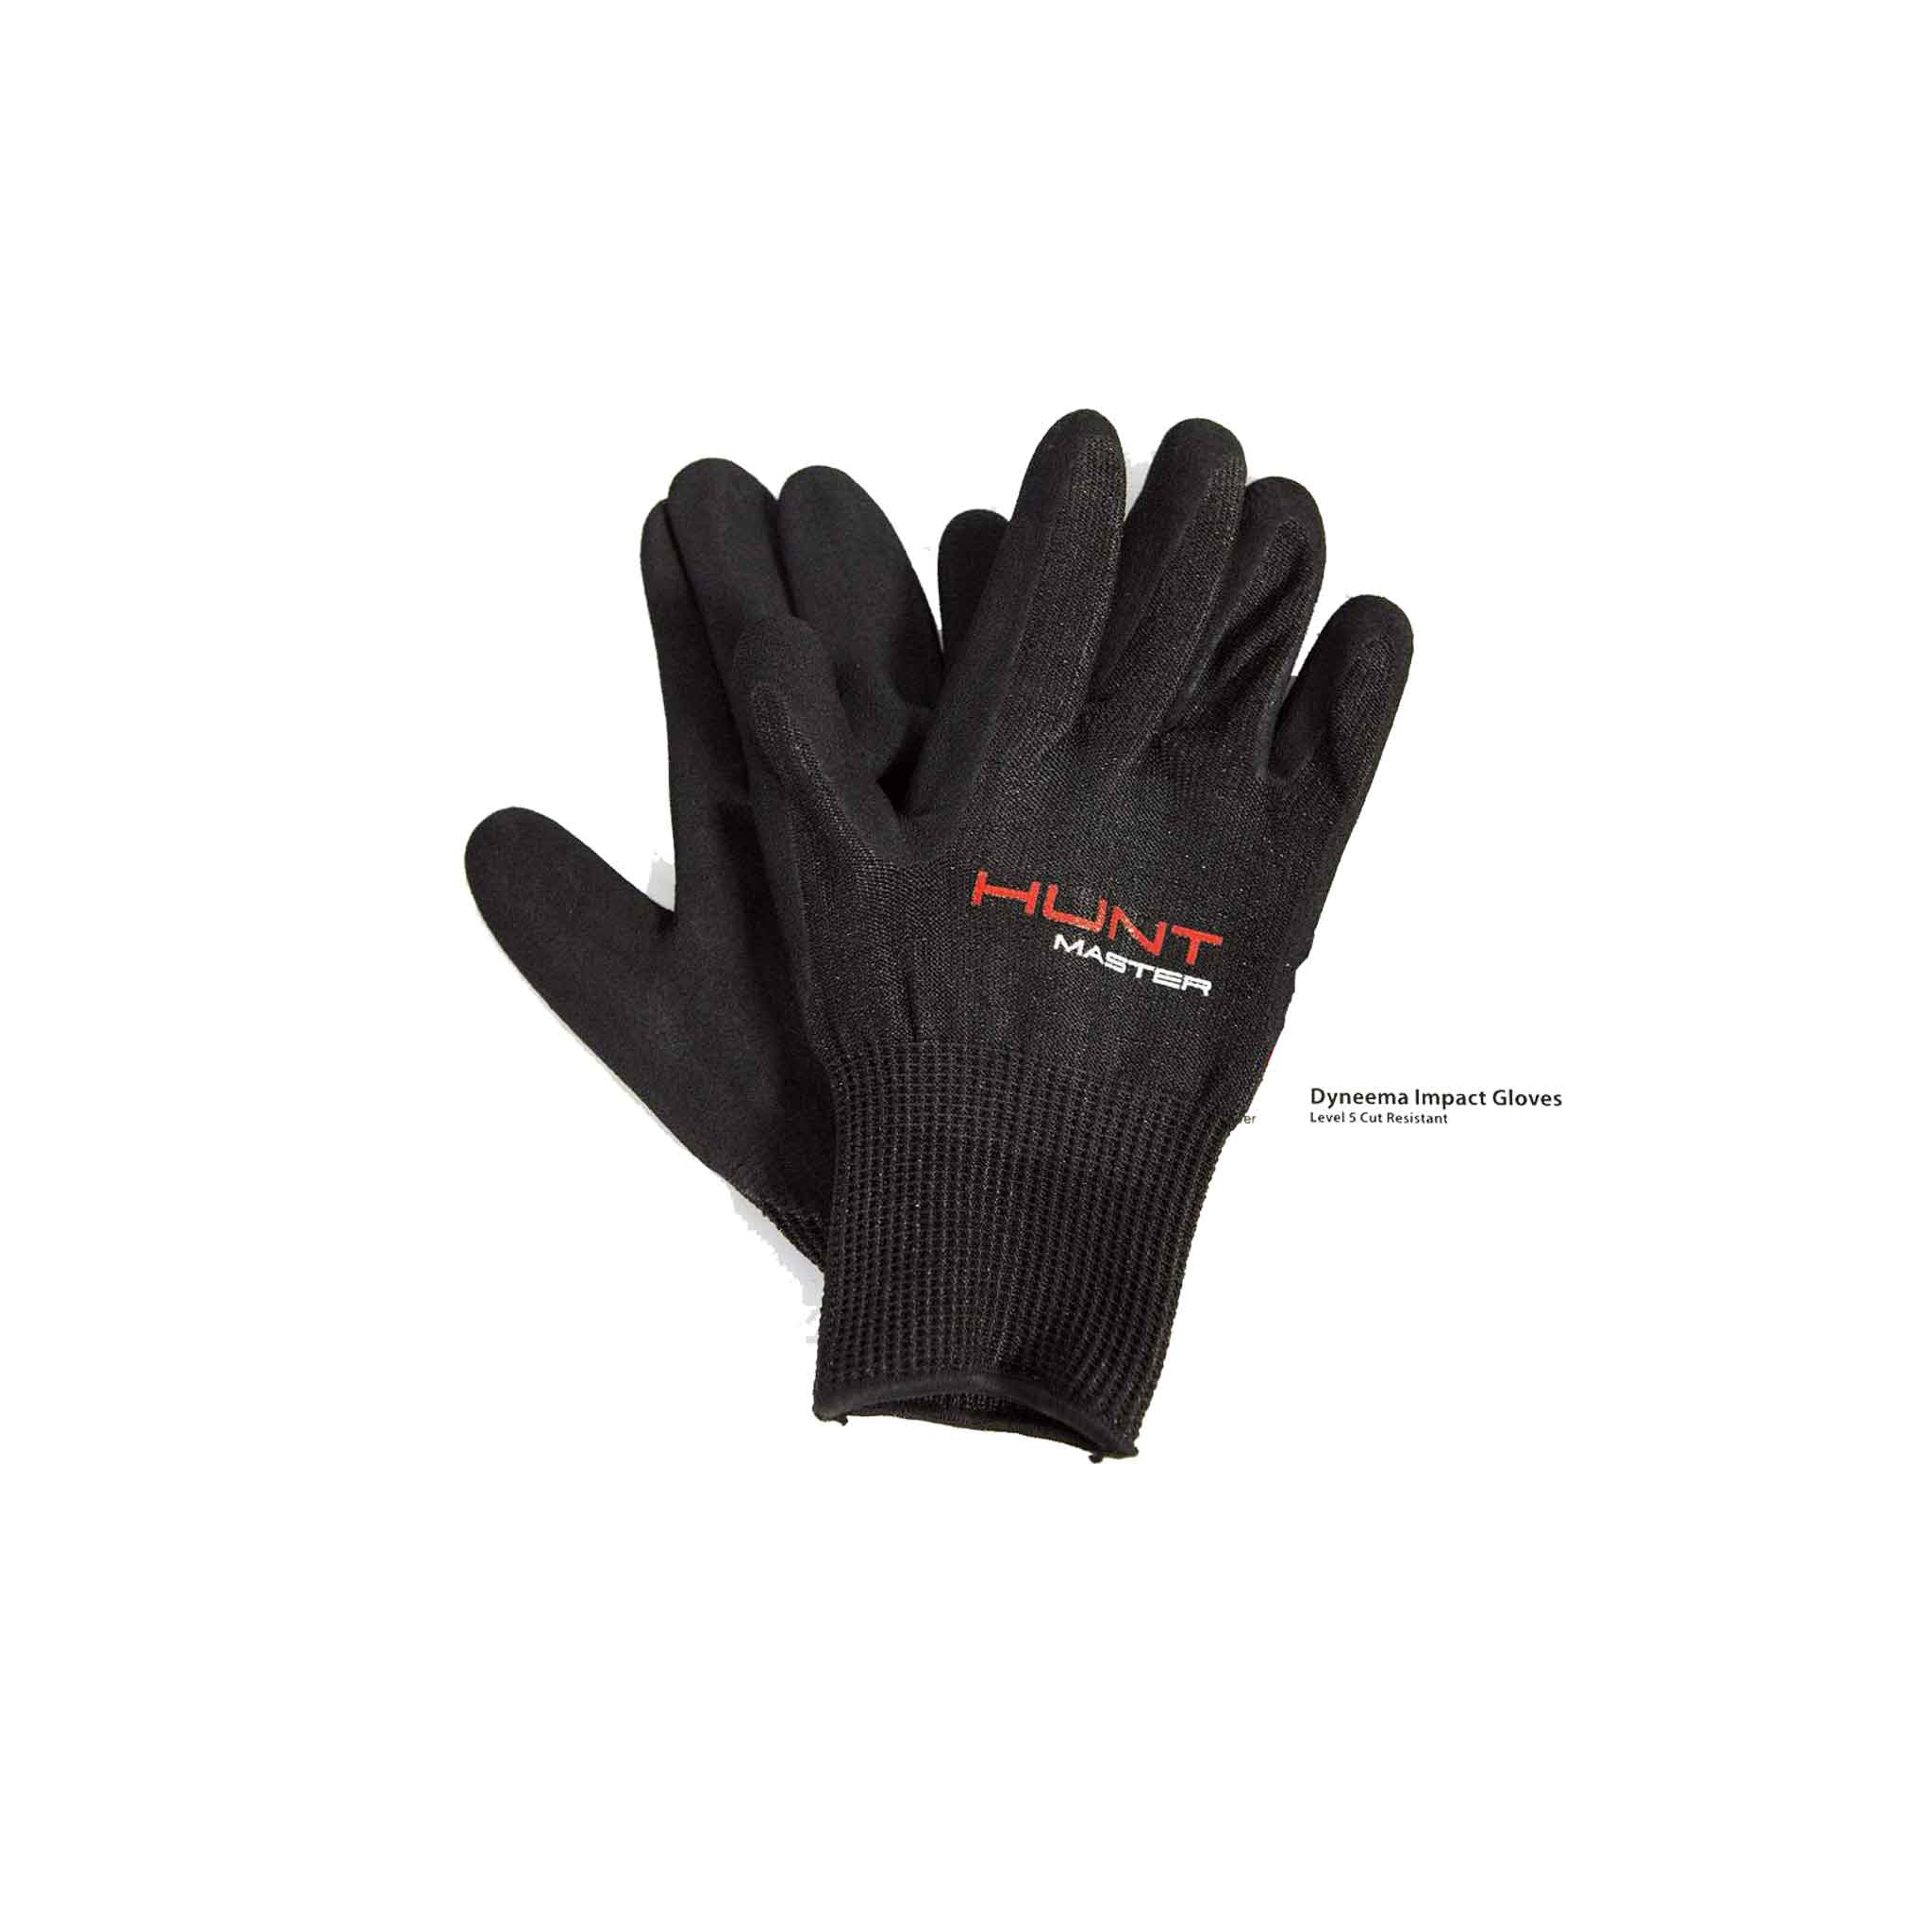 https://divegearaustralia.com.au/wp-content/uploads/2021/08/Dyneema-Tuff-Diving-Gloves-Black.jpg